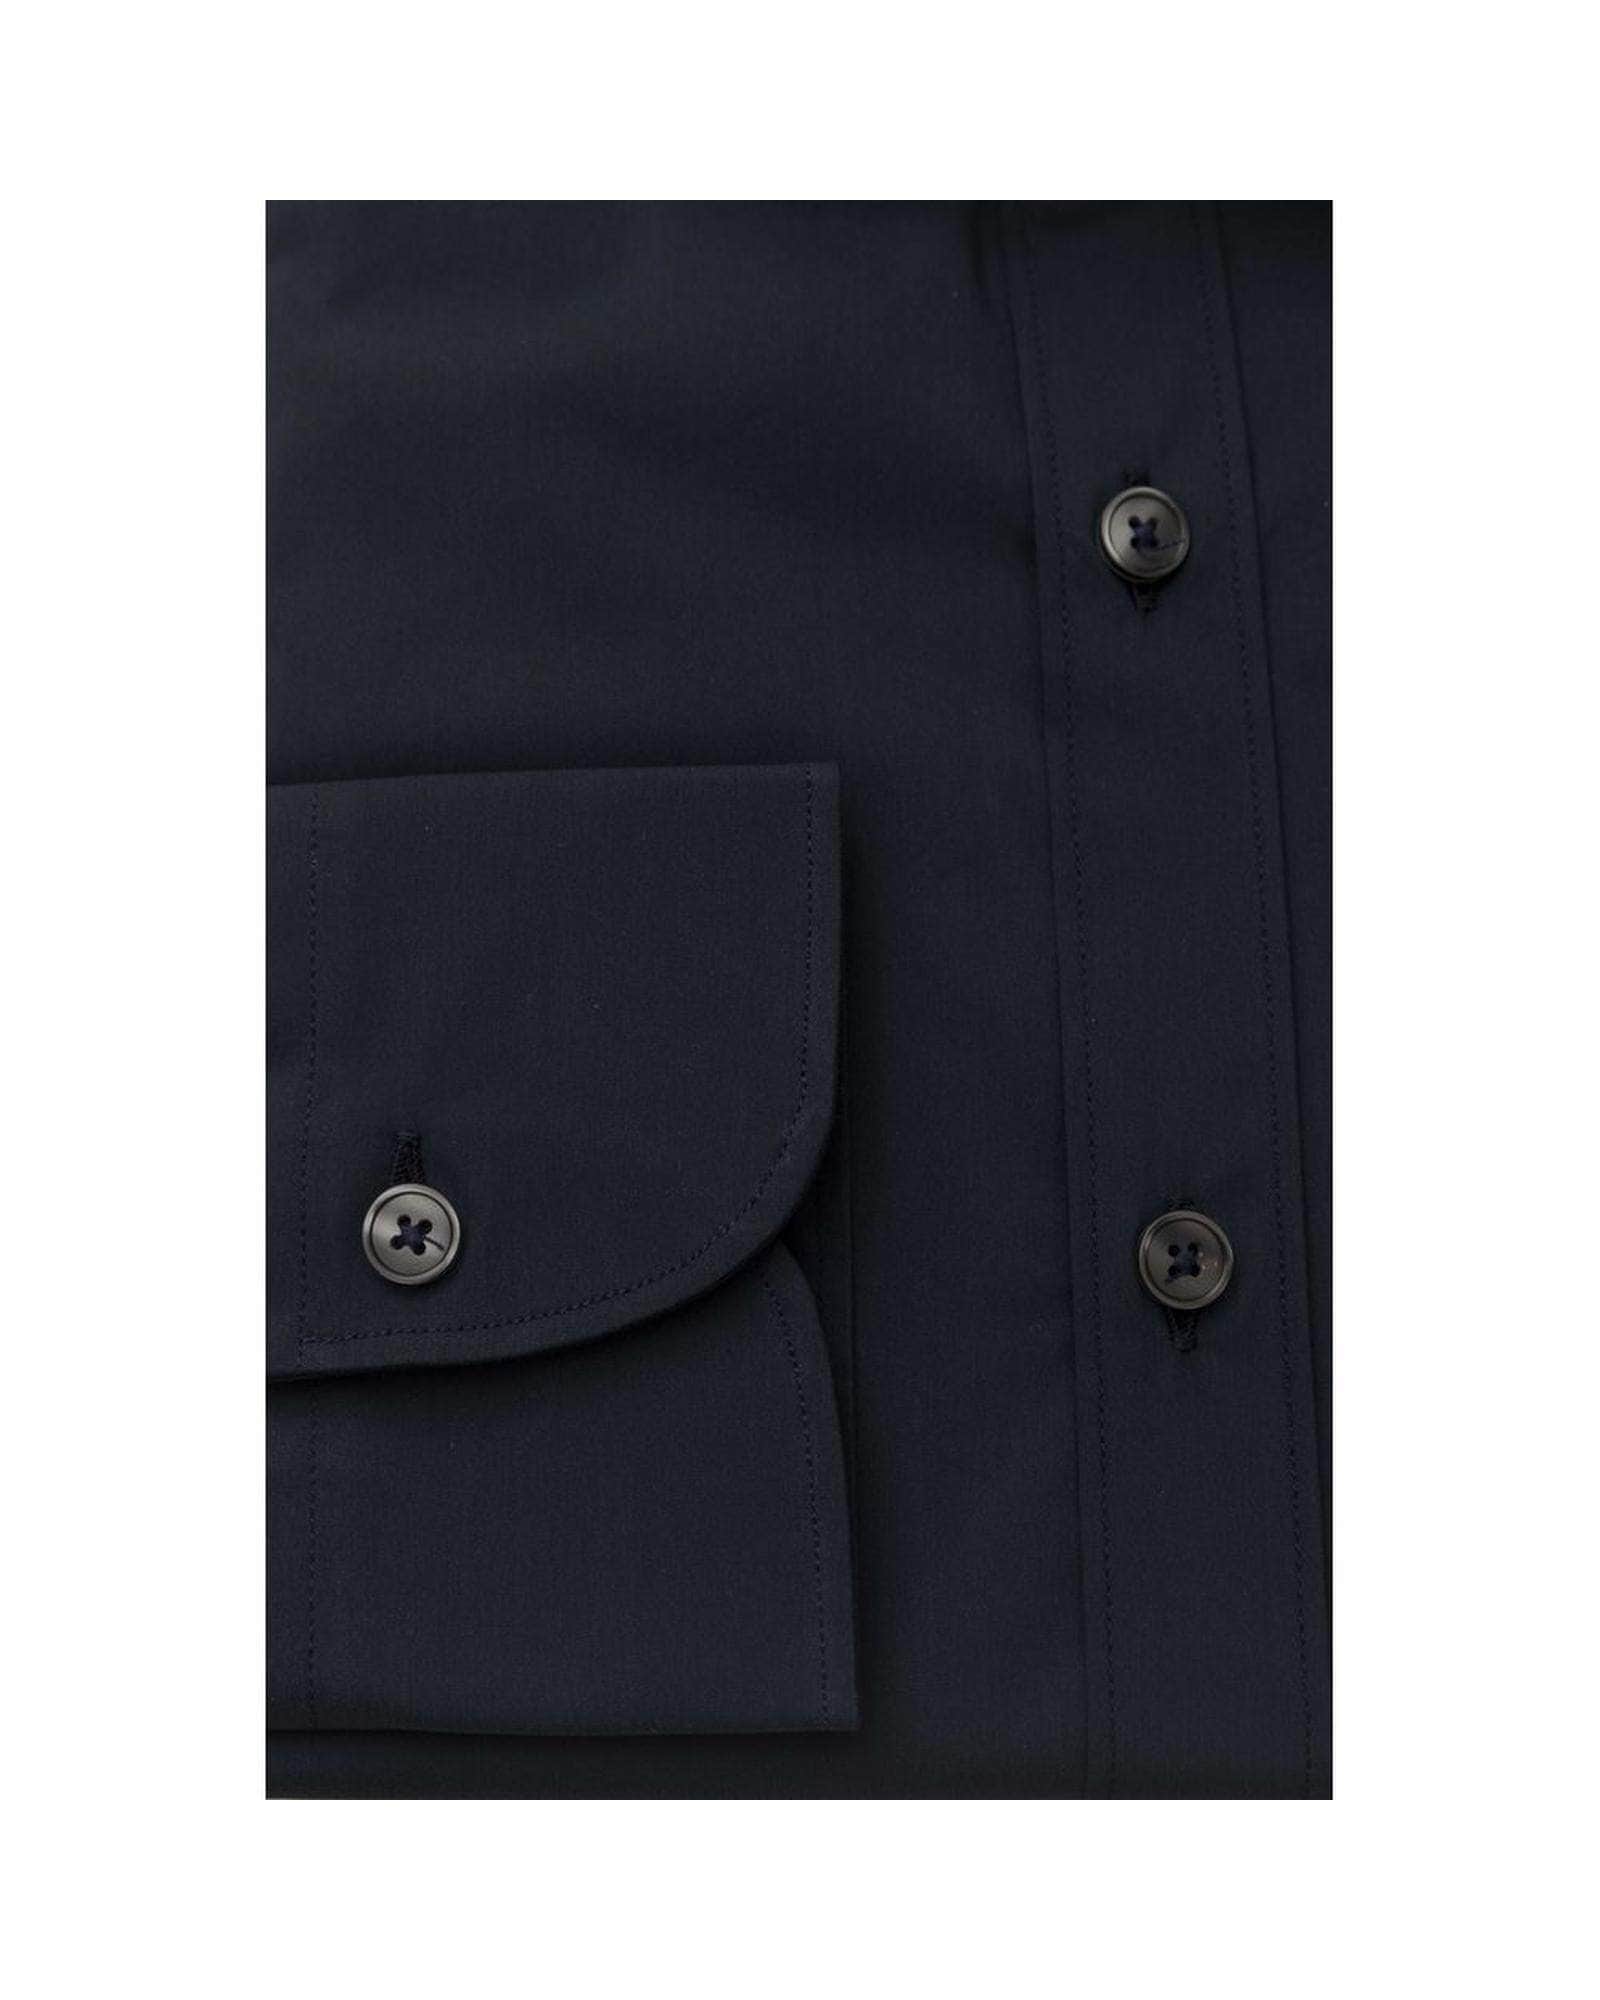 Bagutta Blue/Black/Light Blue Men's Cotton Shirt